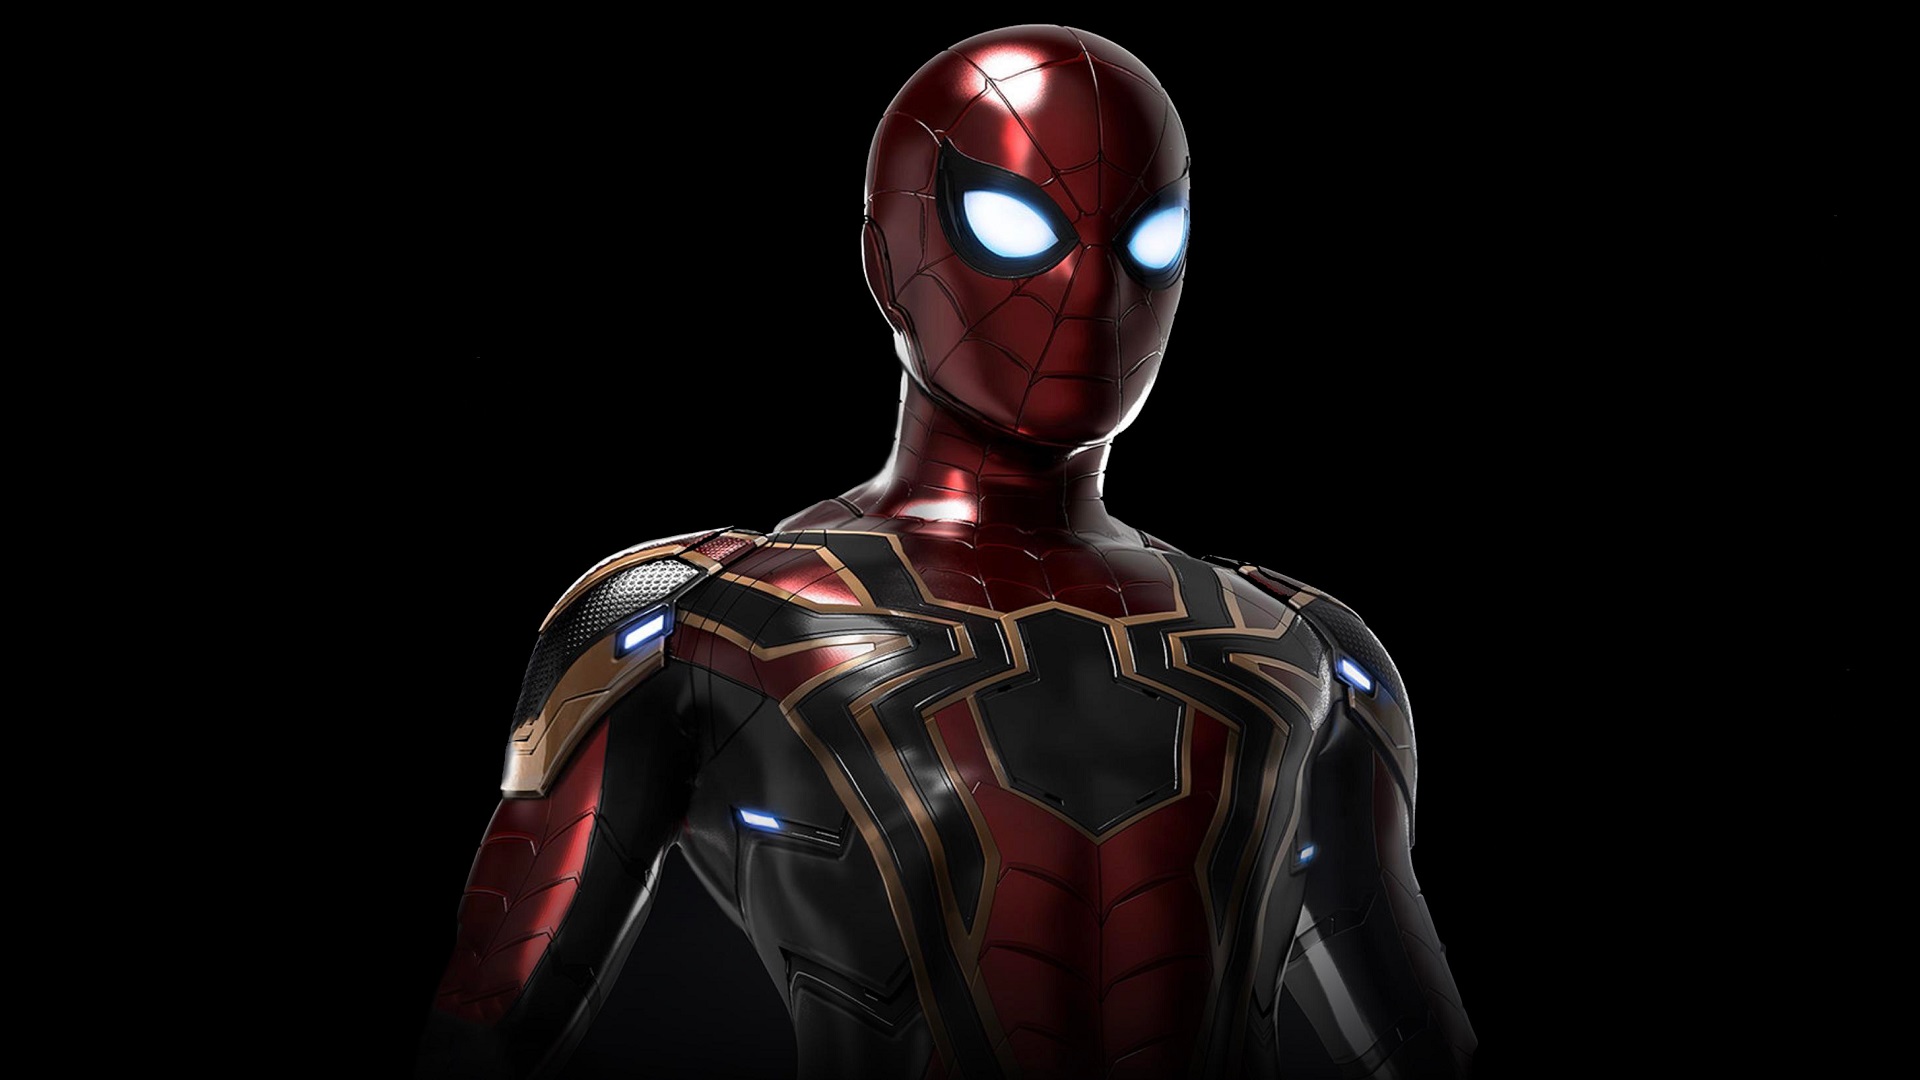 General 1920x1080 Marvel Comics Spider-Man The Avengers Avengers: Infinity war Iron Spider Armor simple background digital art